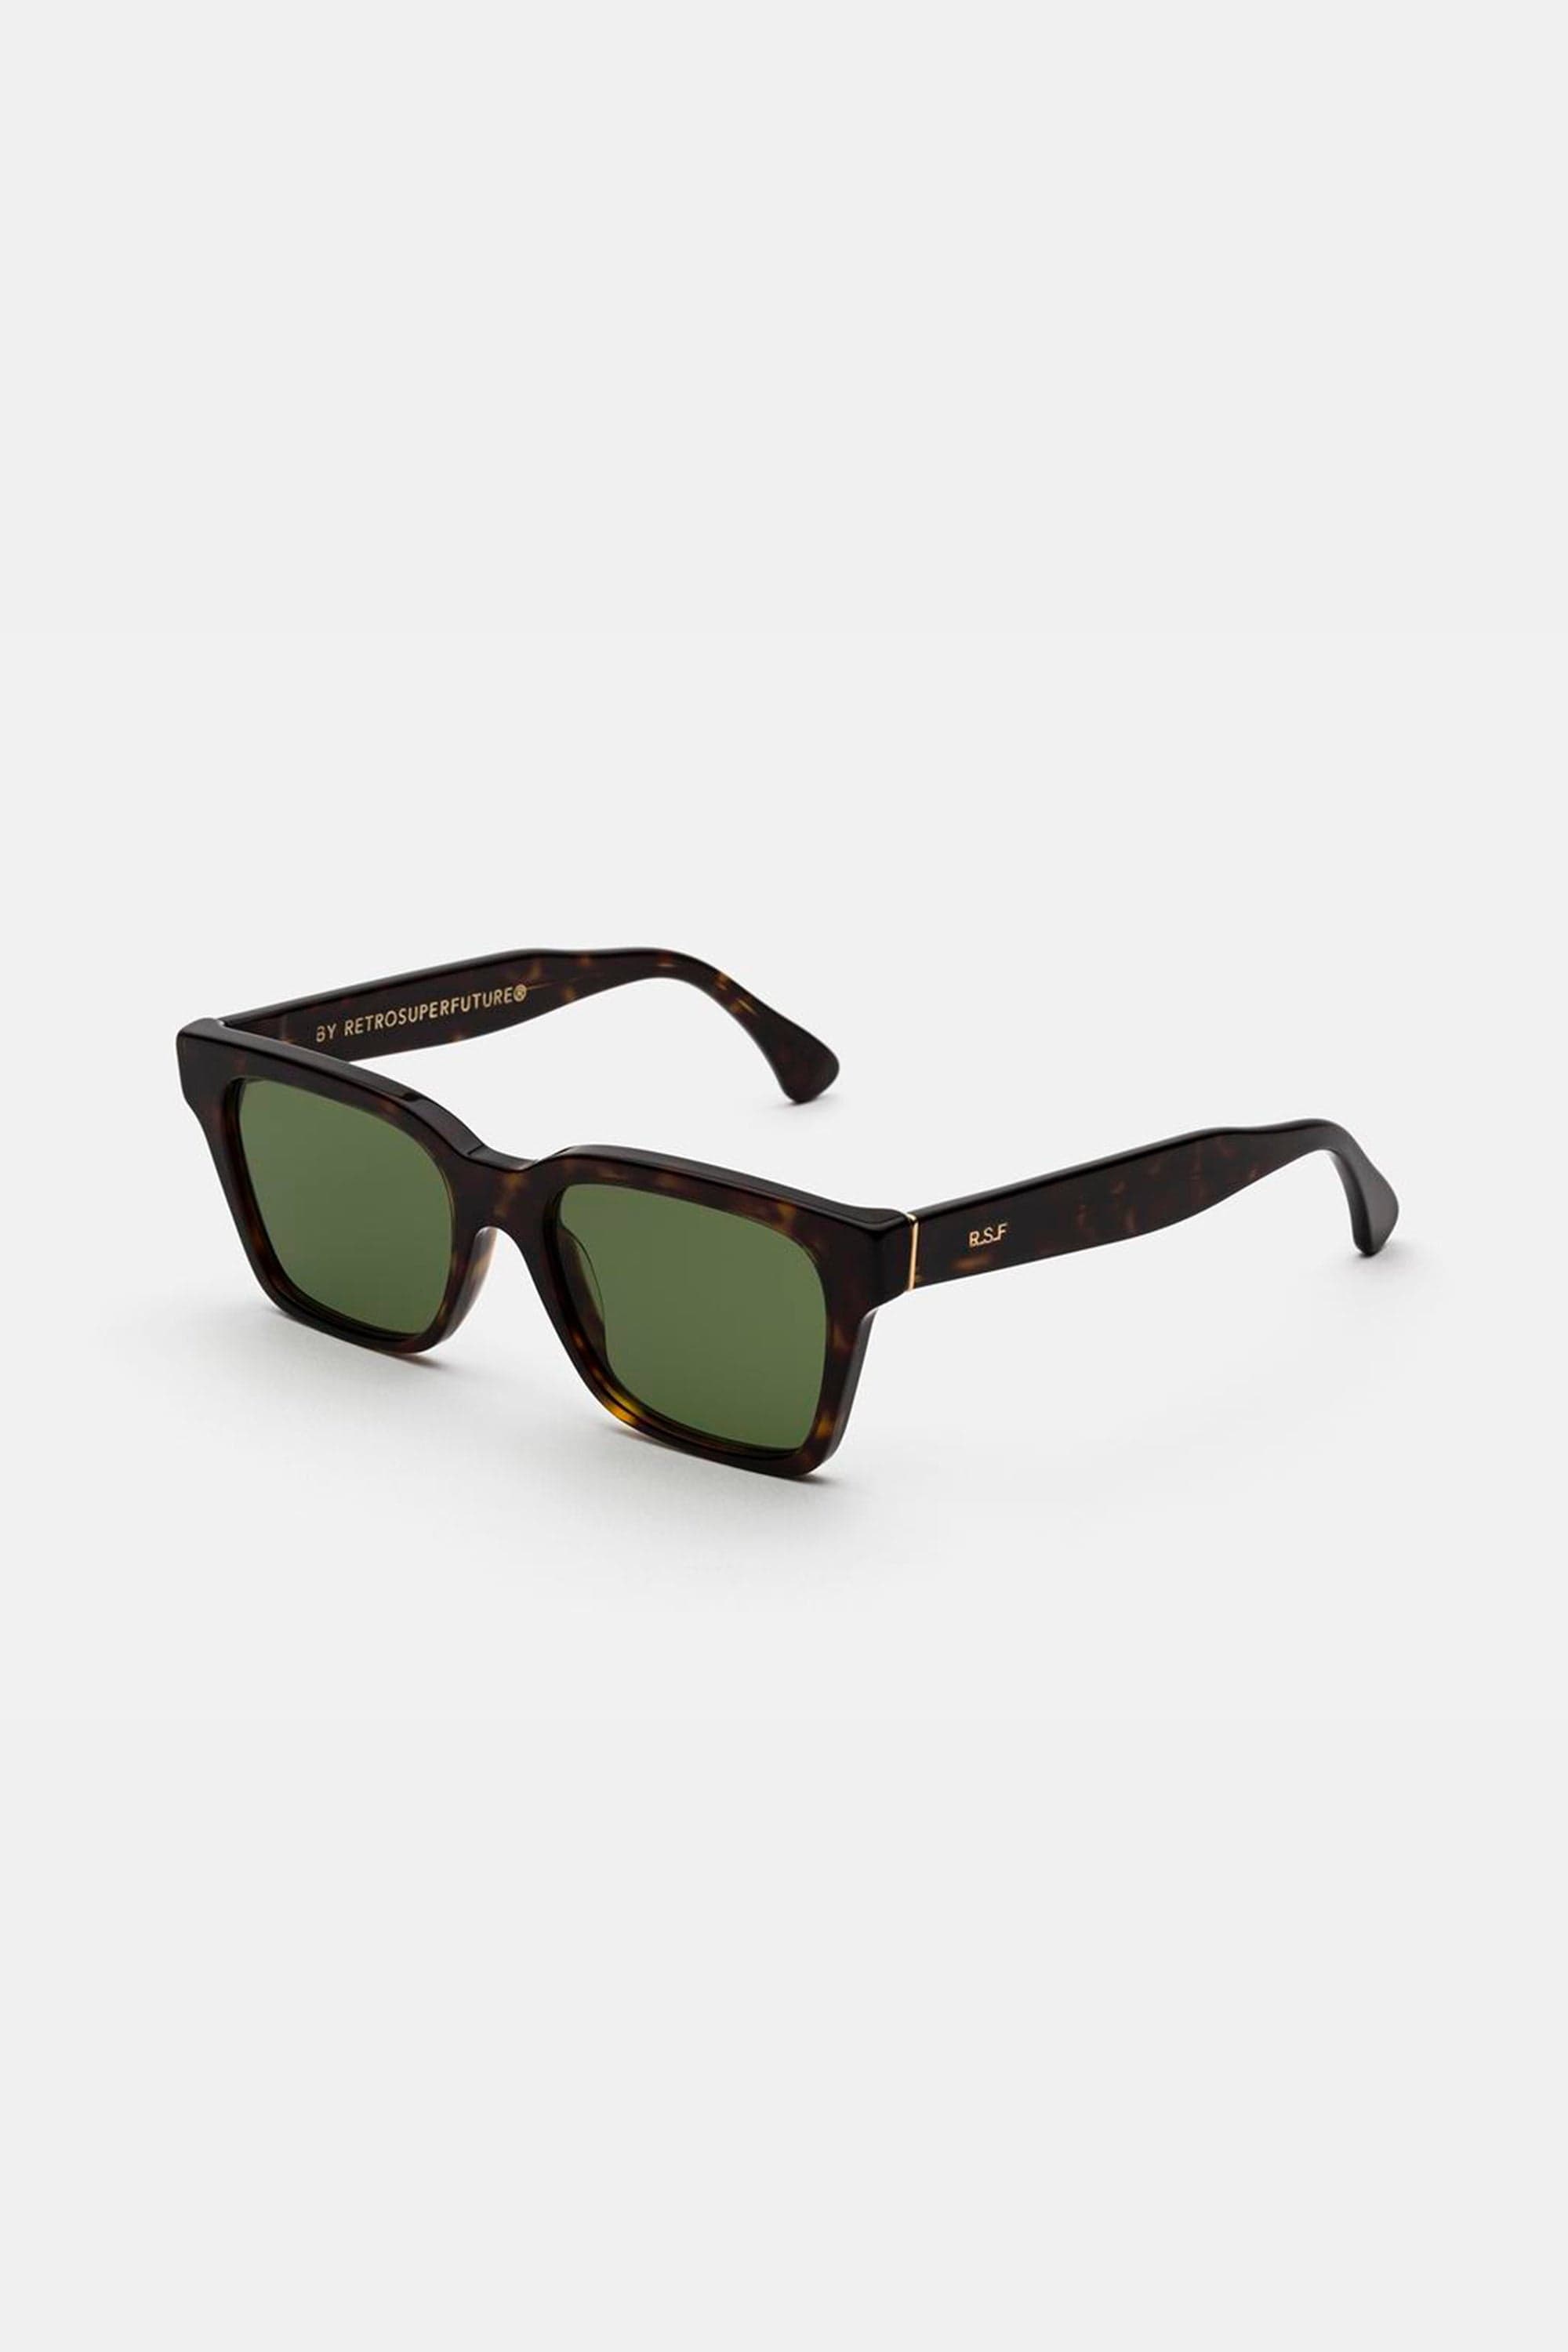 Retrosuperfuture America havana and green sunglasses - Eyewear Club